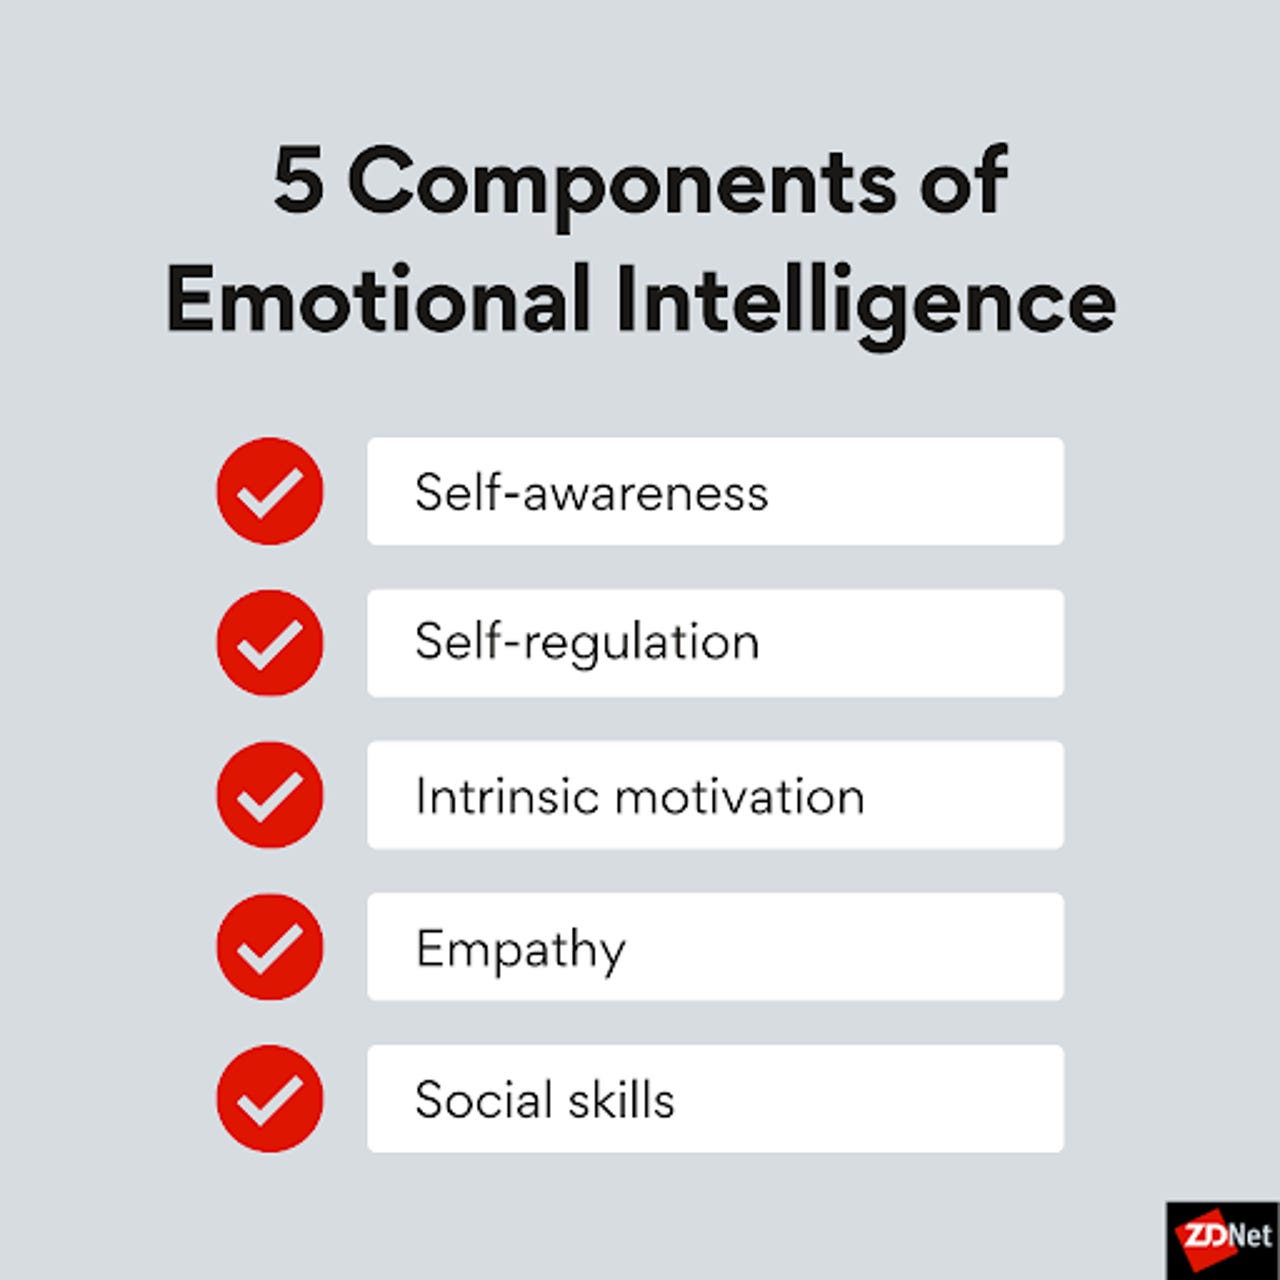 5 components of emotional intelligence: self-awareness, self-regulation, intrinsic motivation, empathy, and social skills